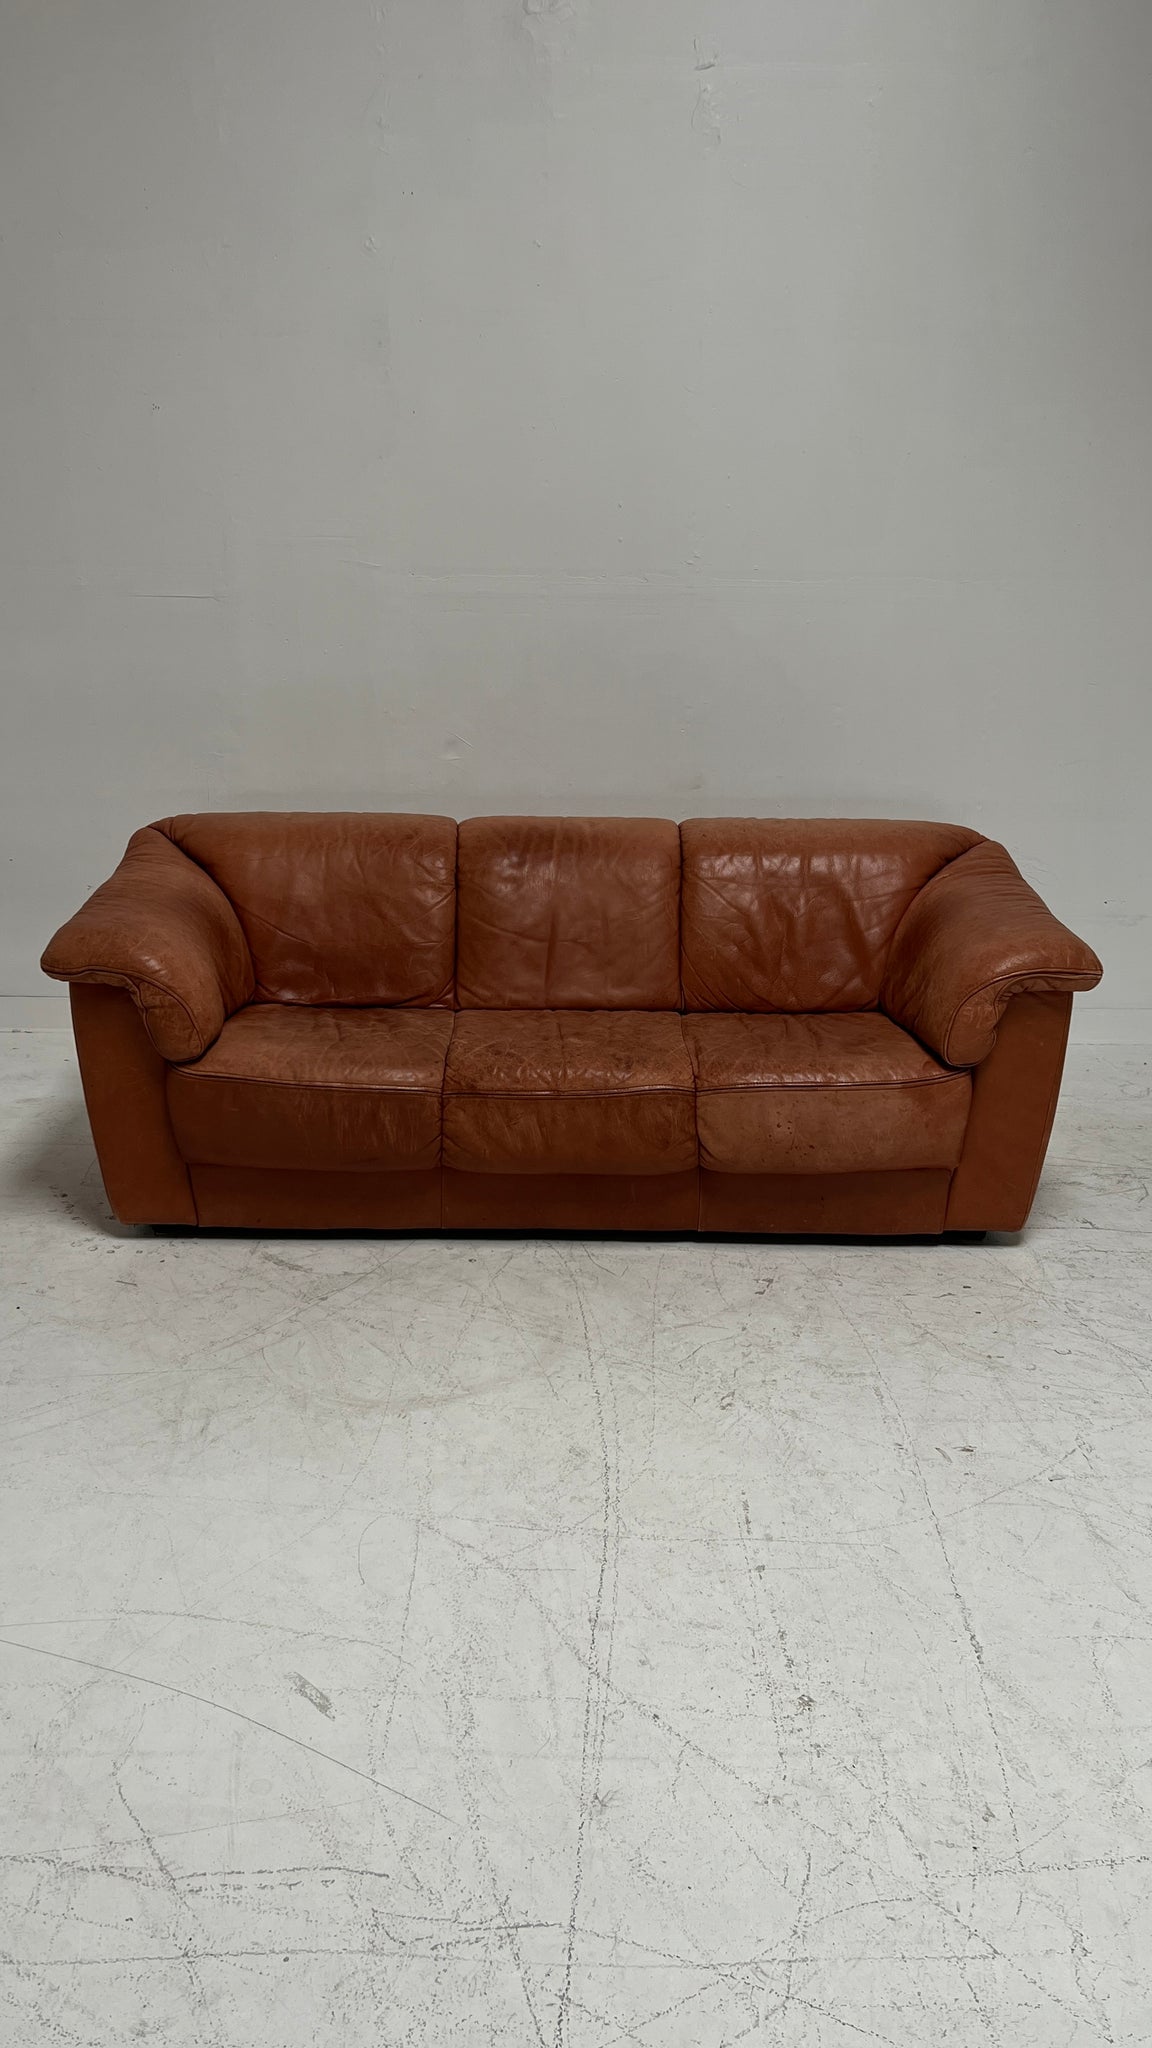 1970s Italian Leather Sofa by Natuzzi